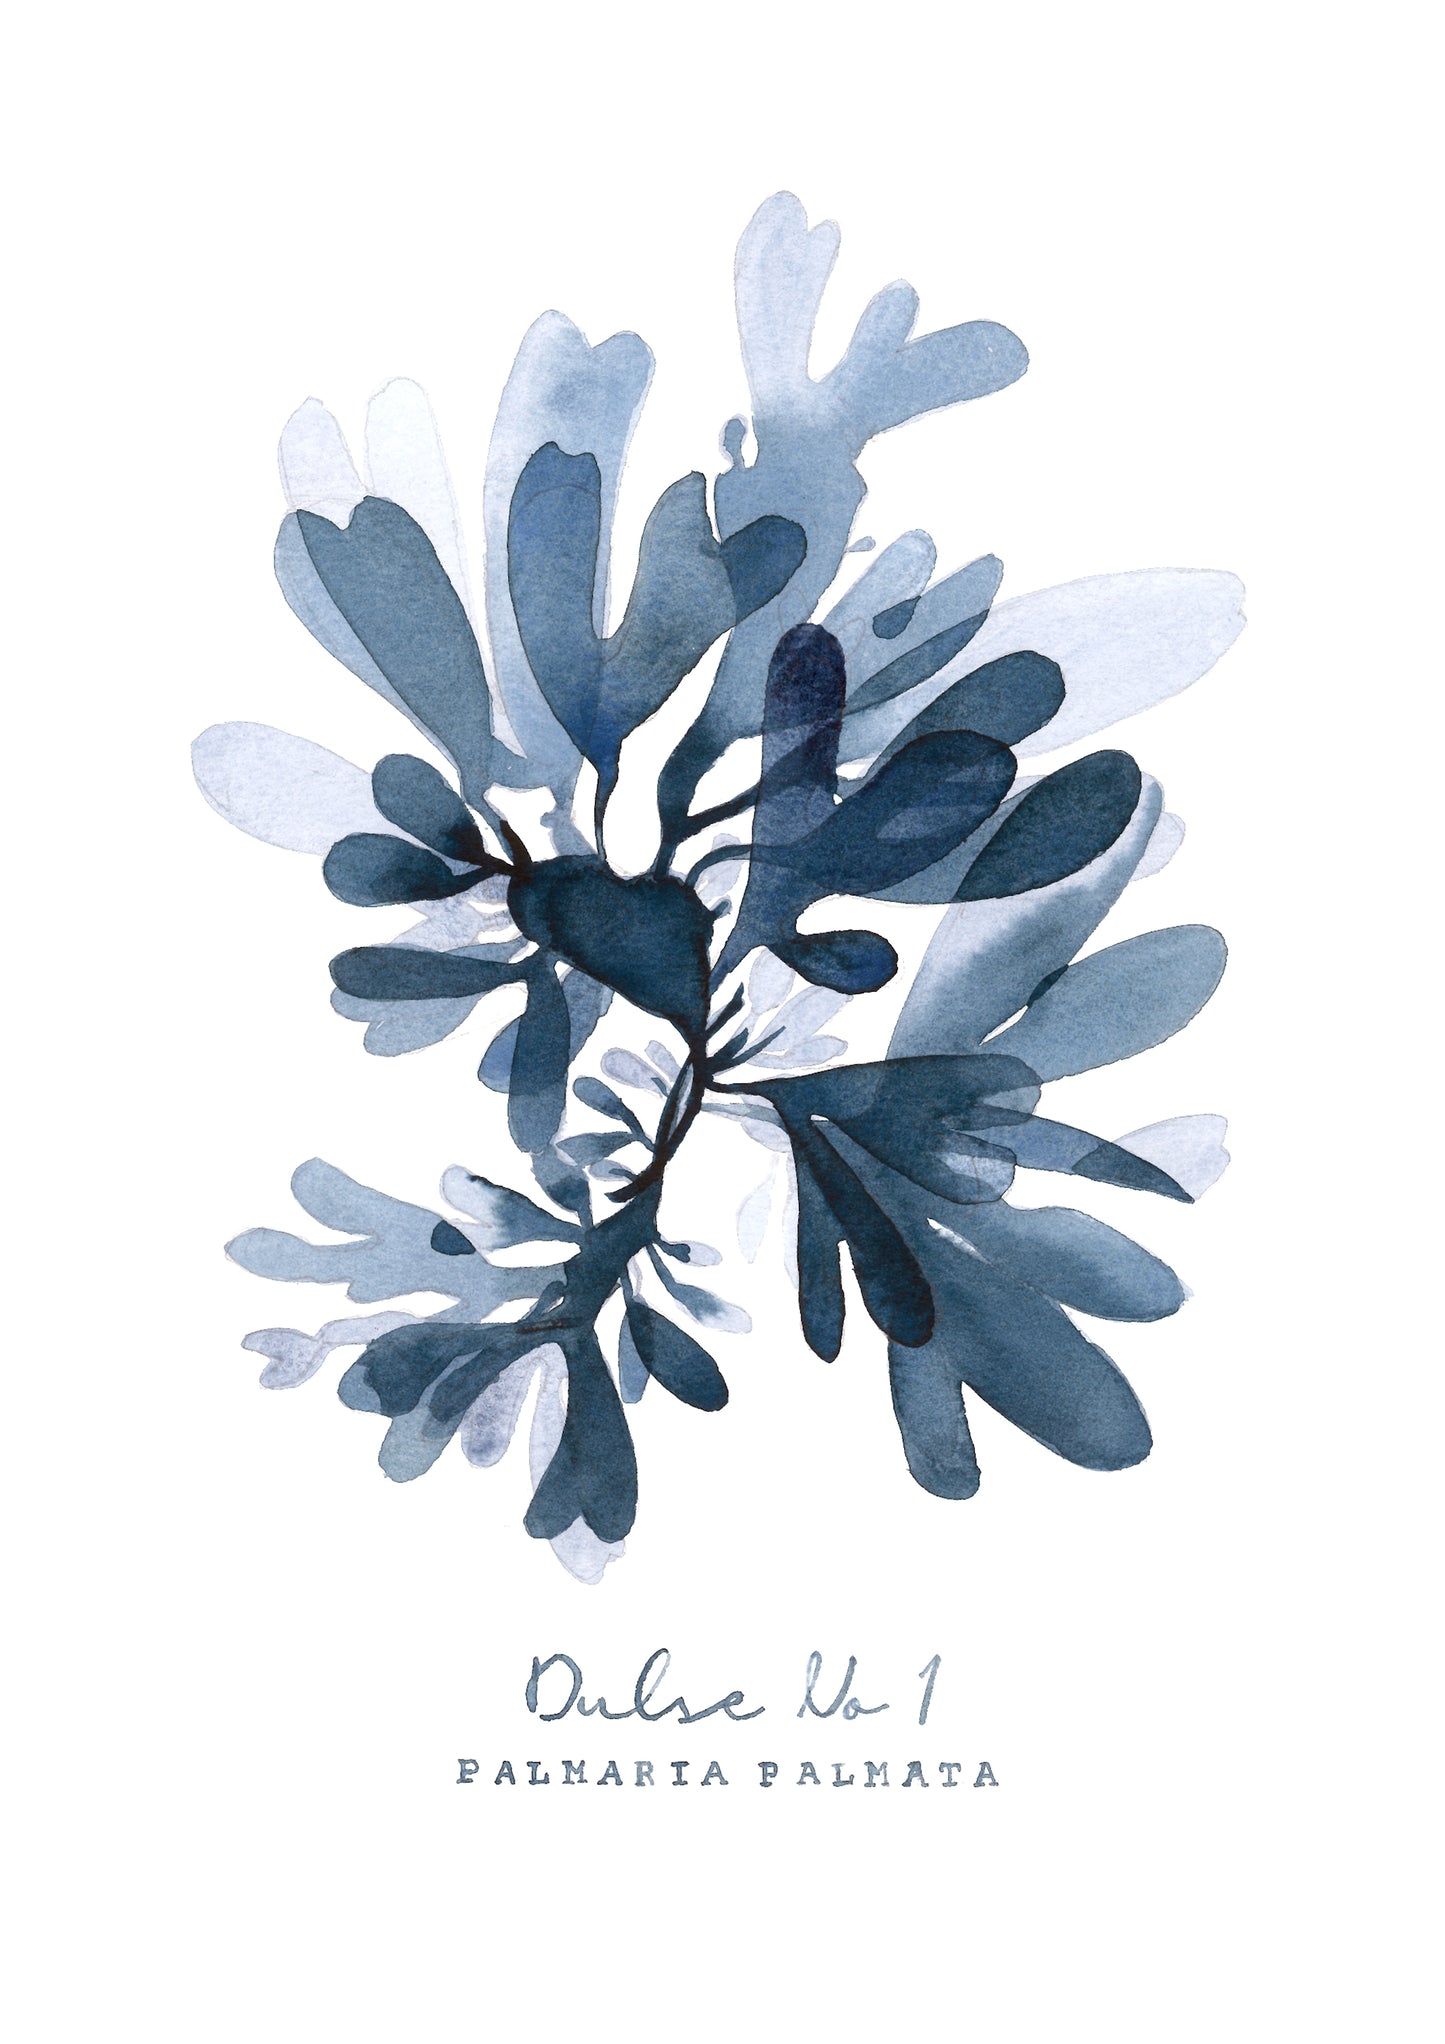 Dulse No 1 Seaweed series by Sarah Bell